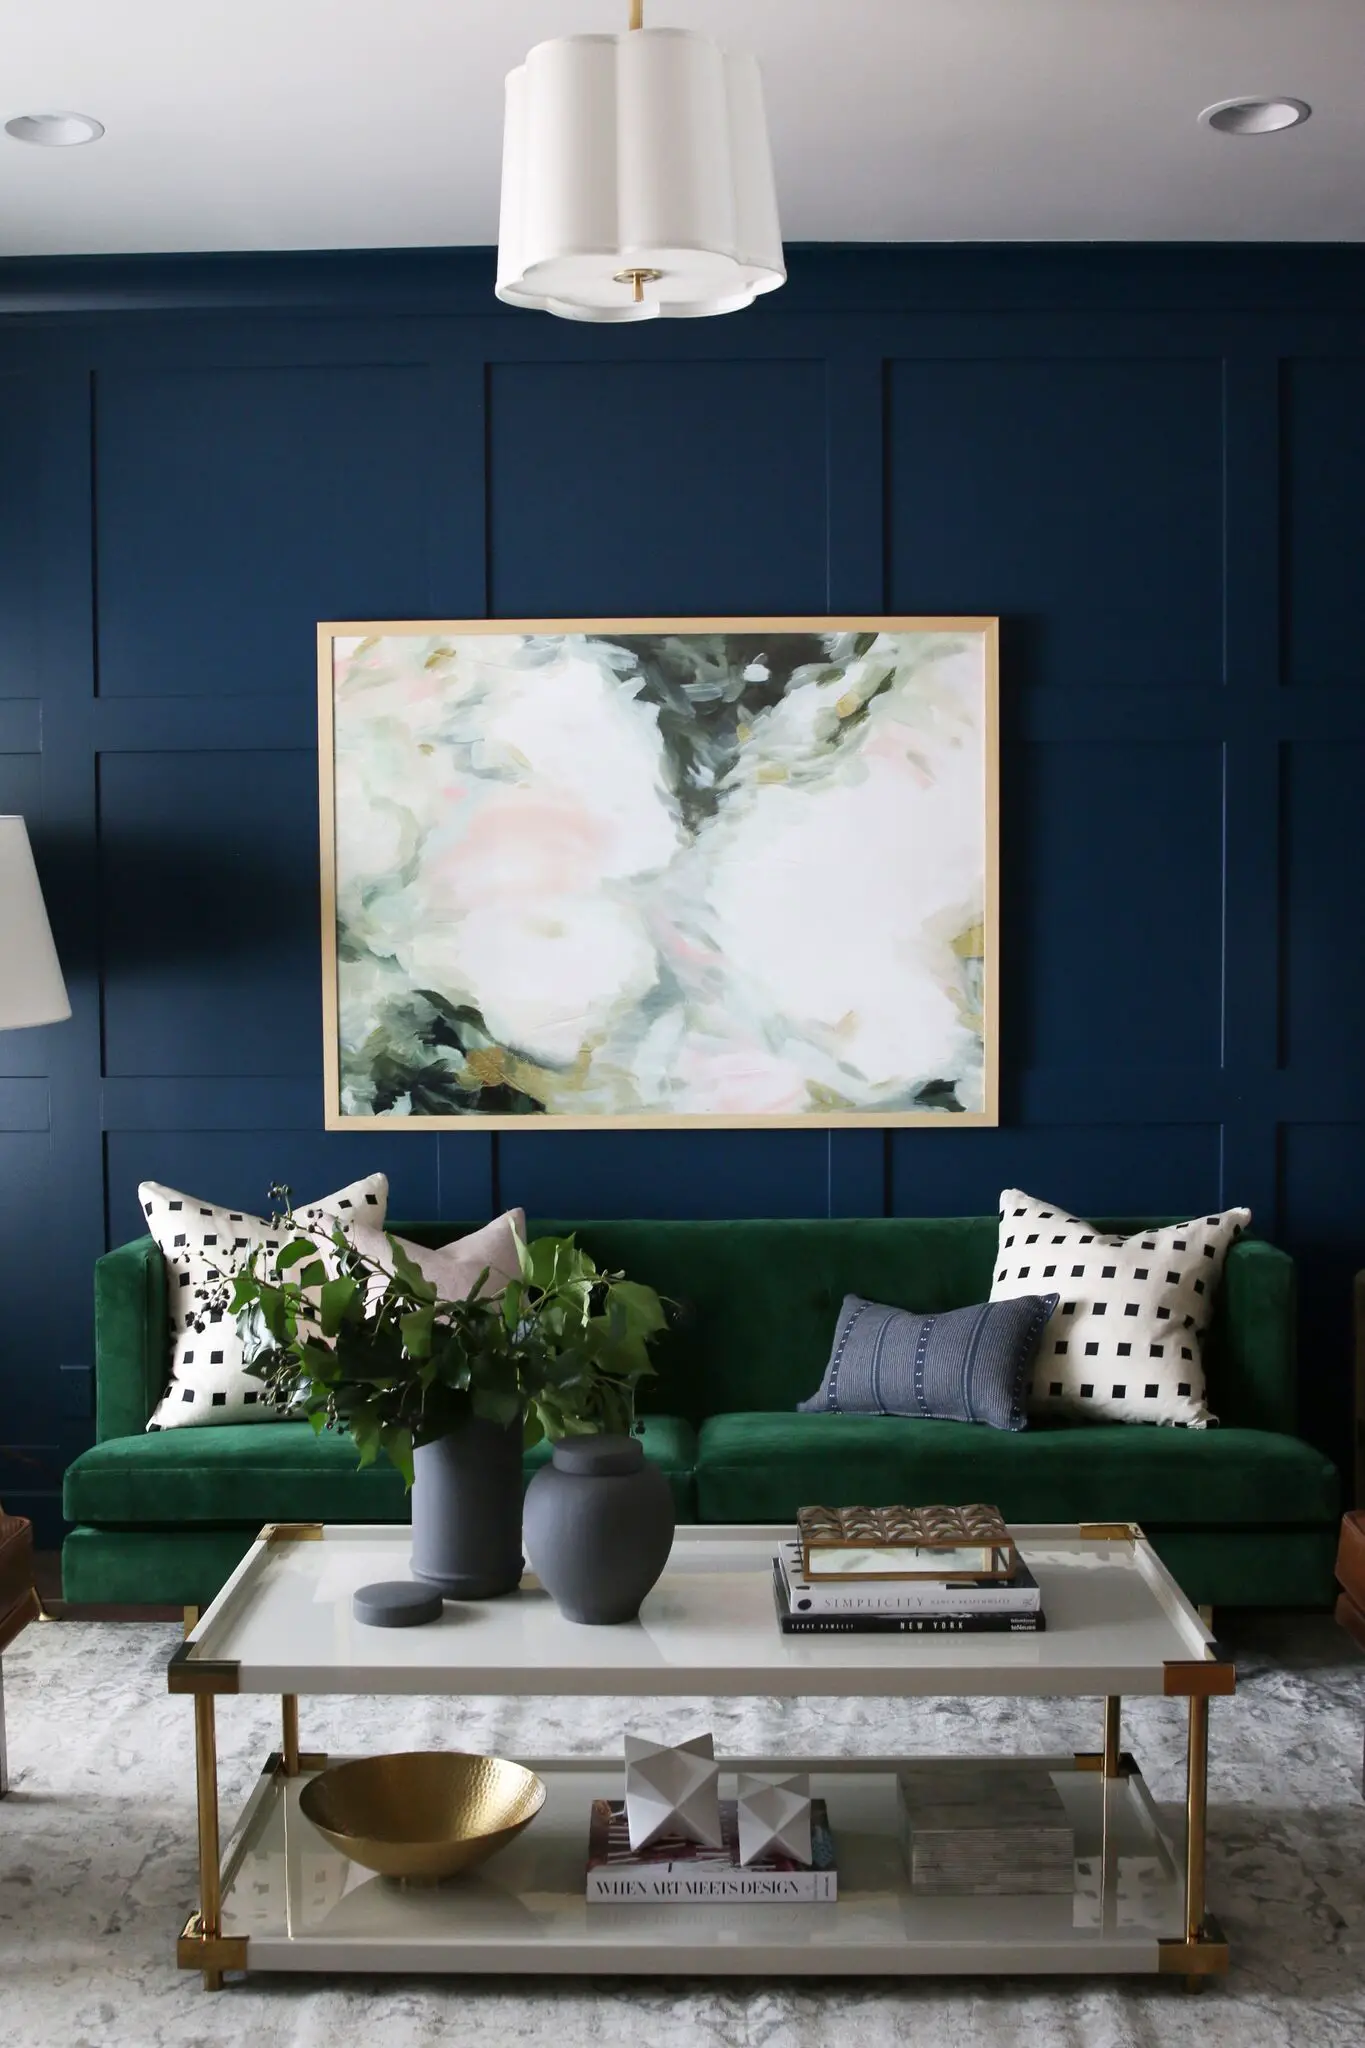 Guest house interior inspiration - dark navy paneled walls - That Homebird Life Blog